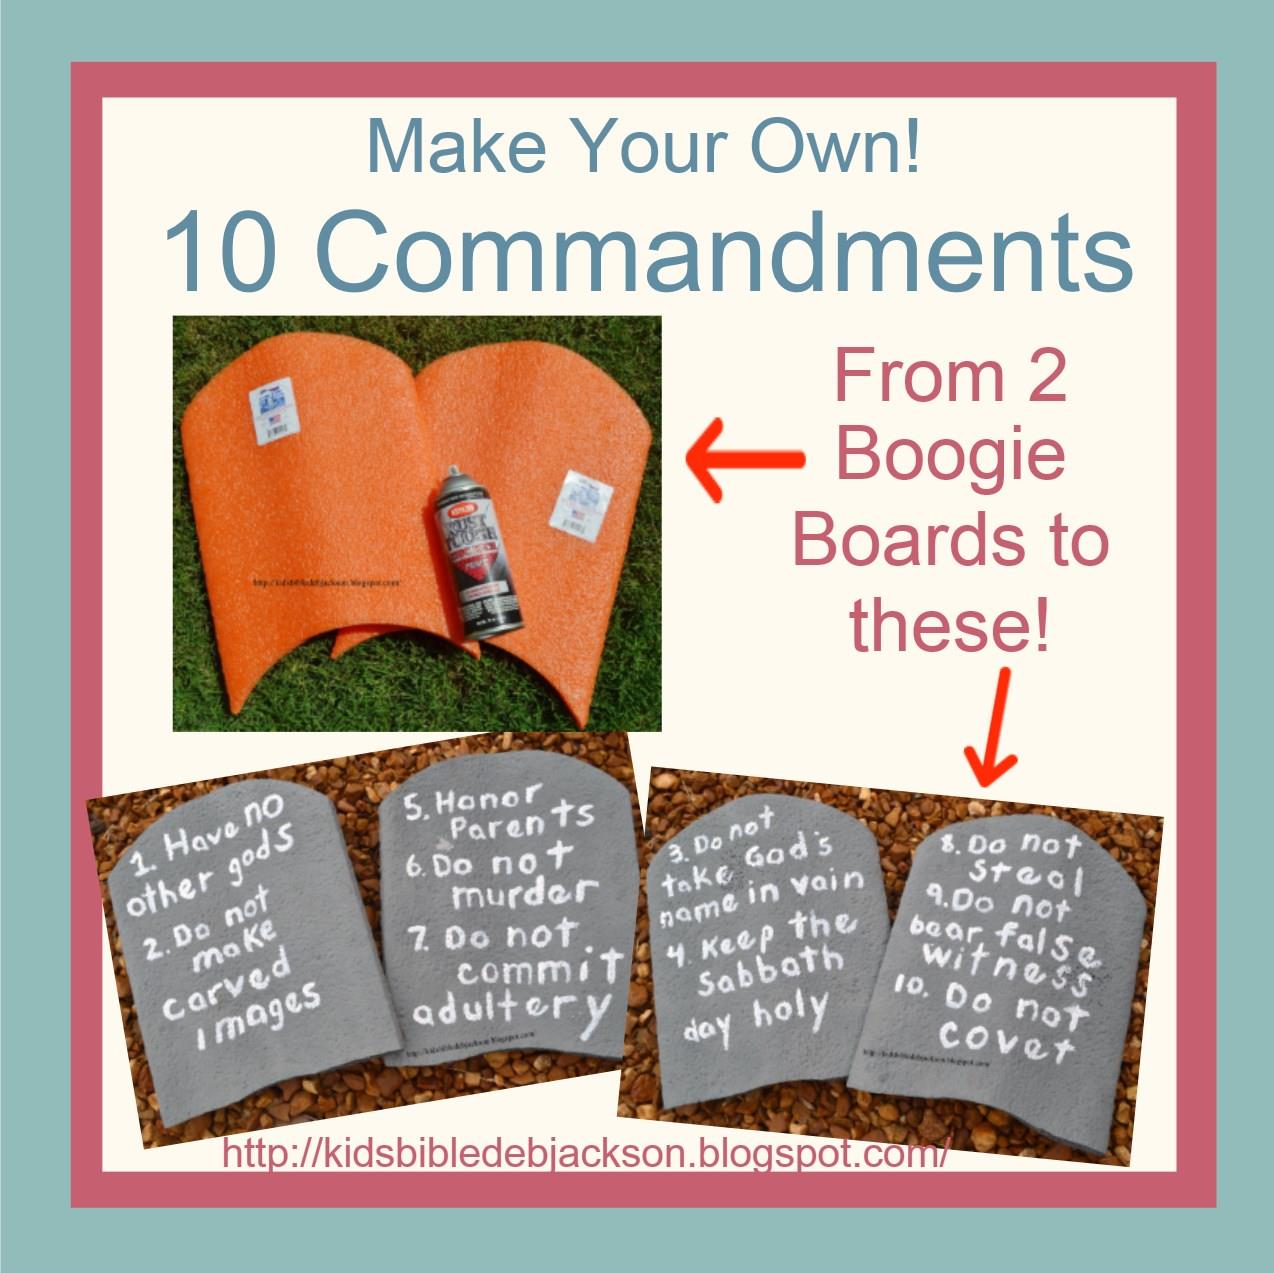 Make Your Own 10 Commandments Visual!